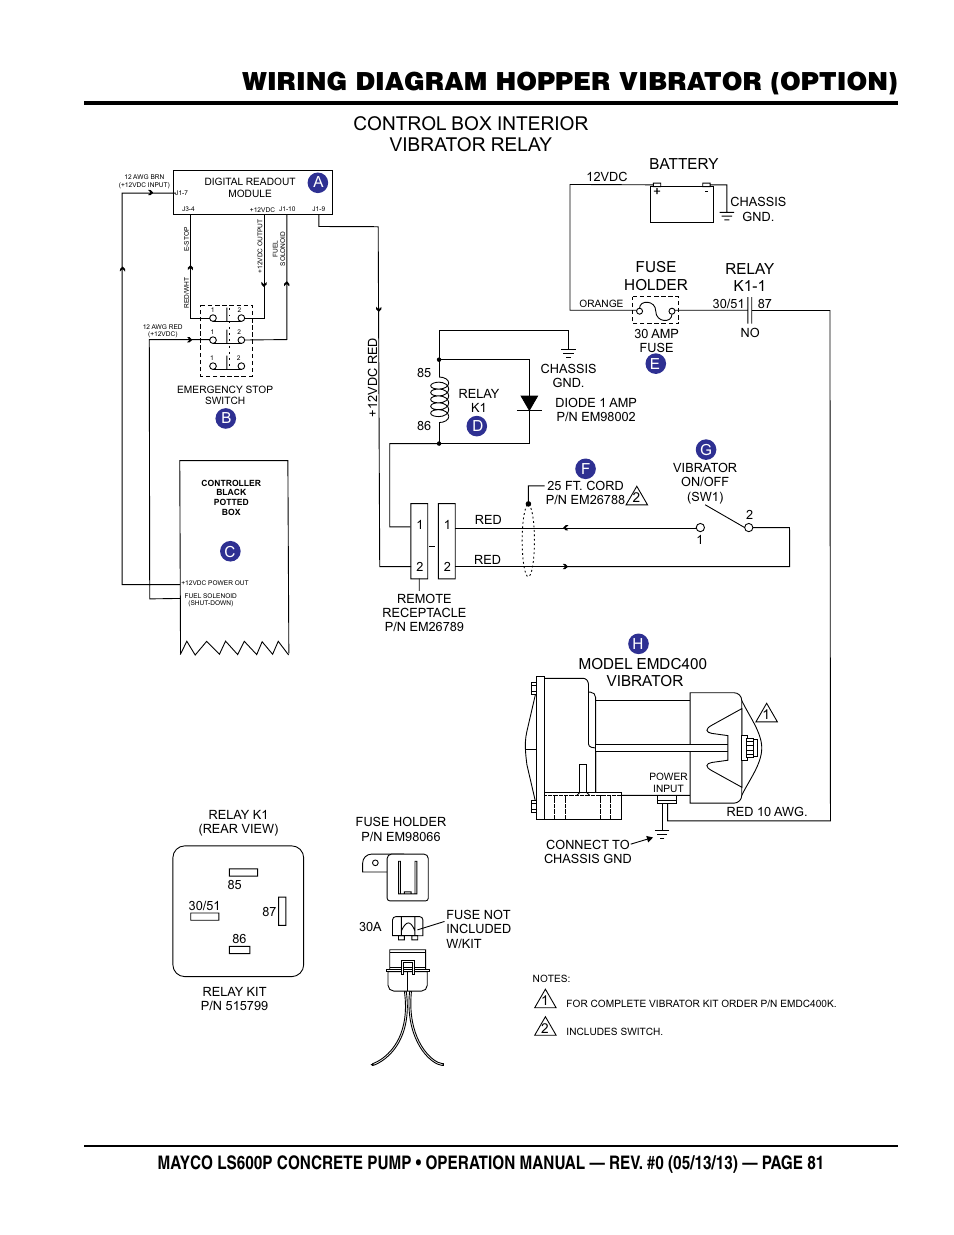 Wiring diagram hopper vibrator (option), Control box interior vibrator  relay, Fuse holder | Multiquip LS-600P User Manual | Page 81 / 88 |  Original mode